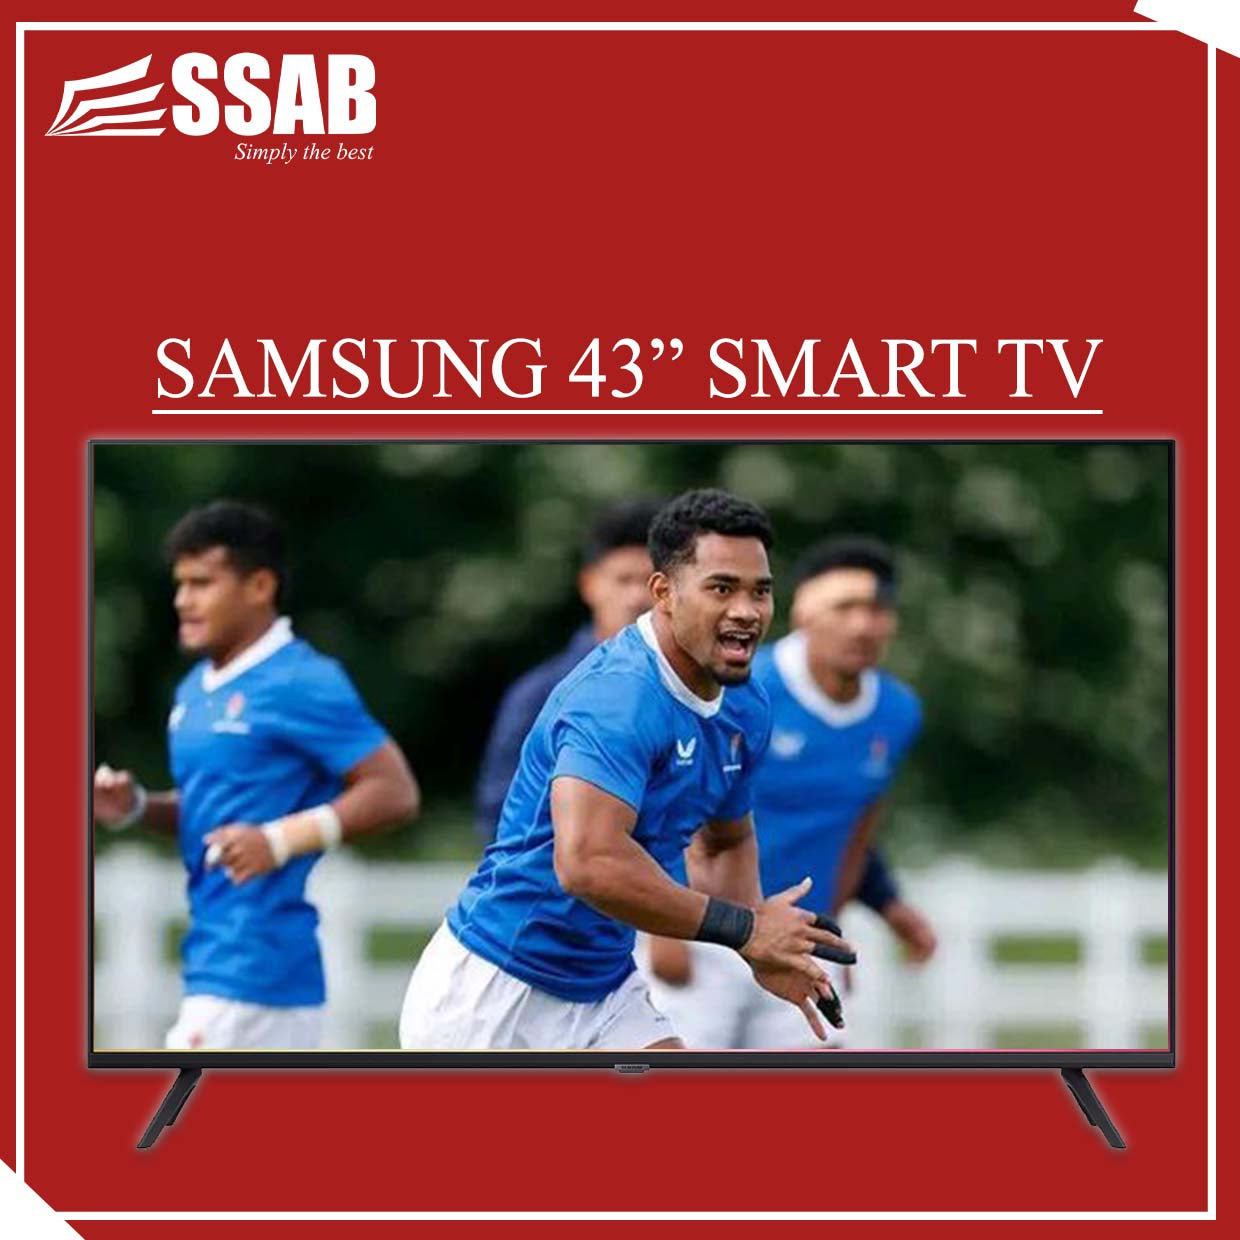 Samsung 43" Smart TV